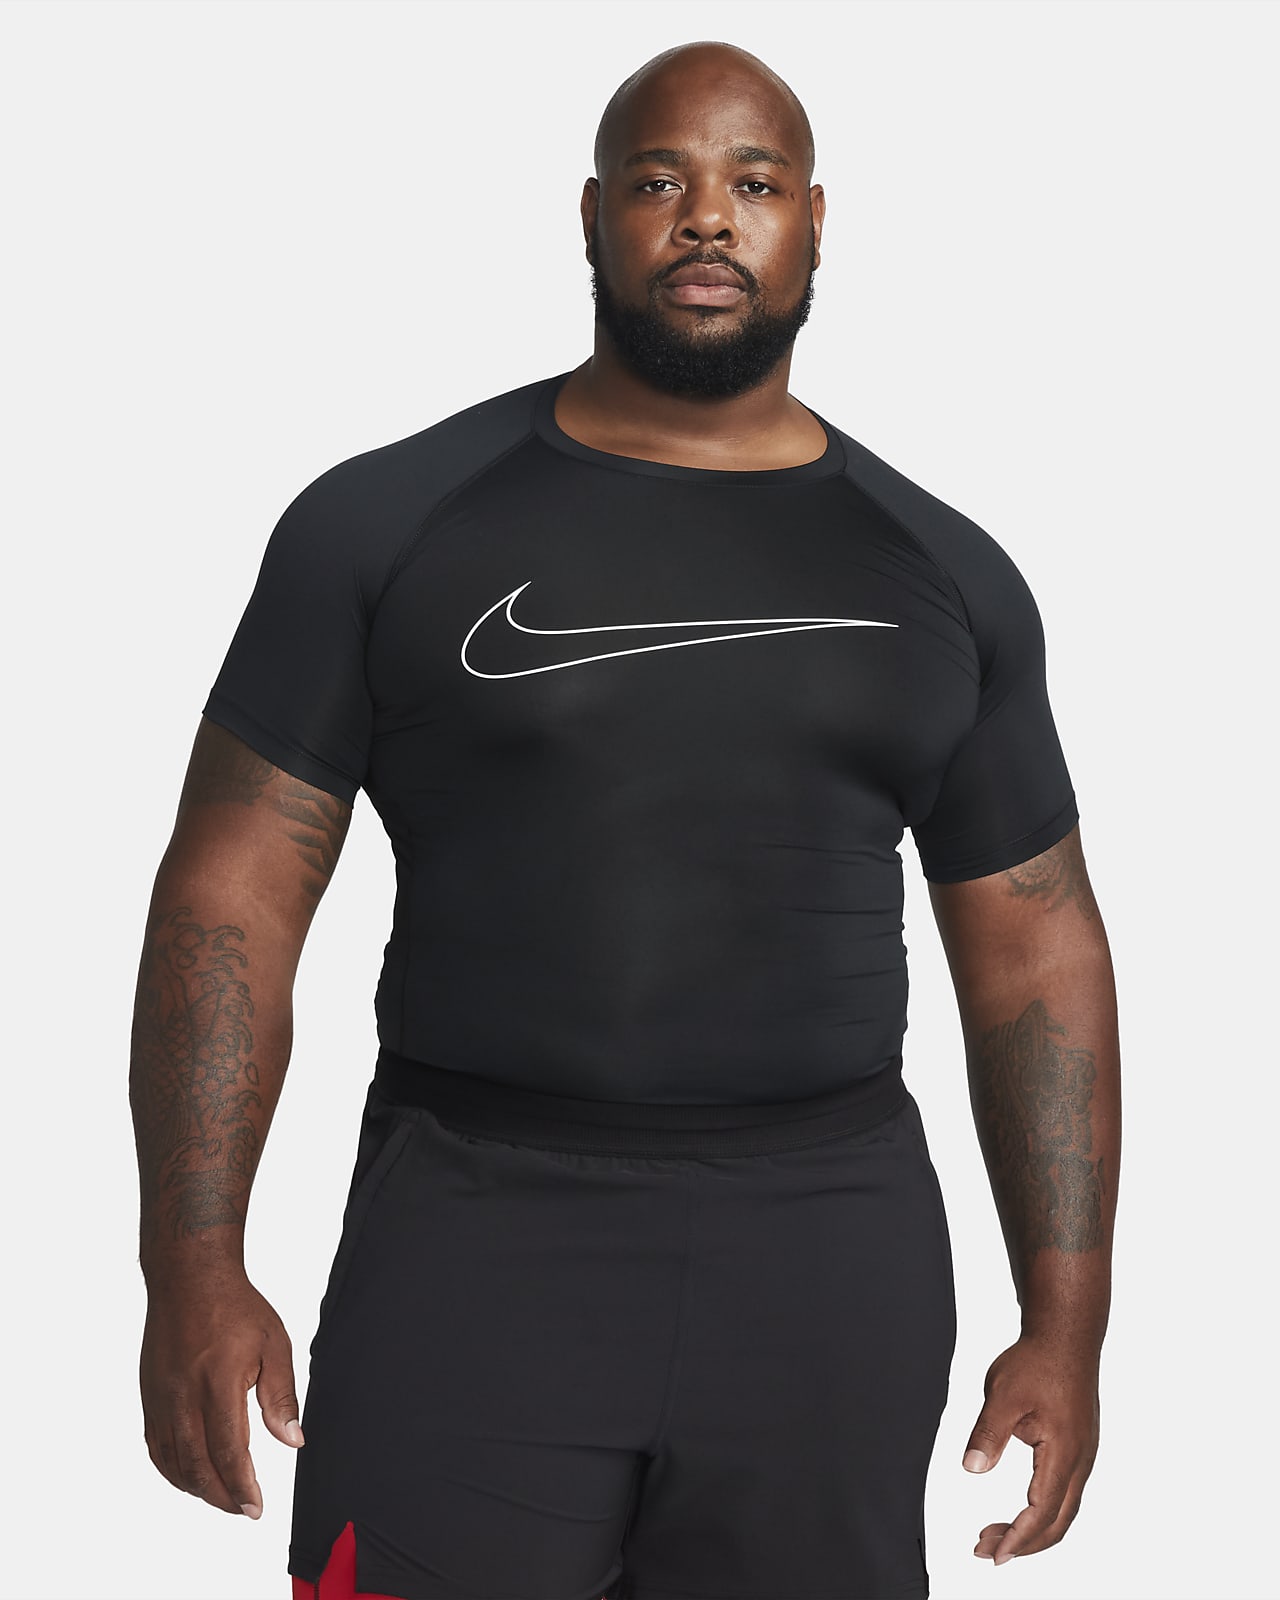 Nacional postre Lírico Nike Pro Dri-FIT Men's Tight Fit Short-Sleeve Top. Nike.com